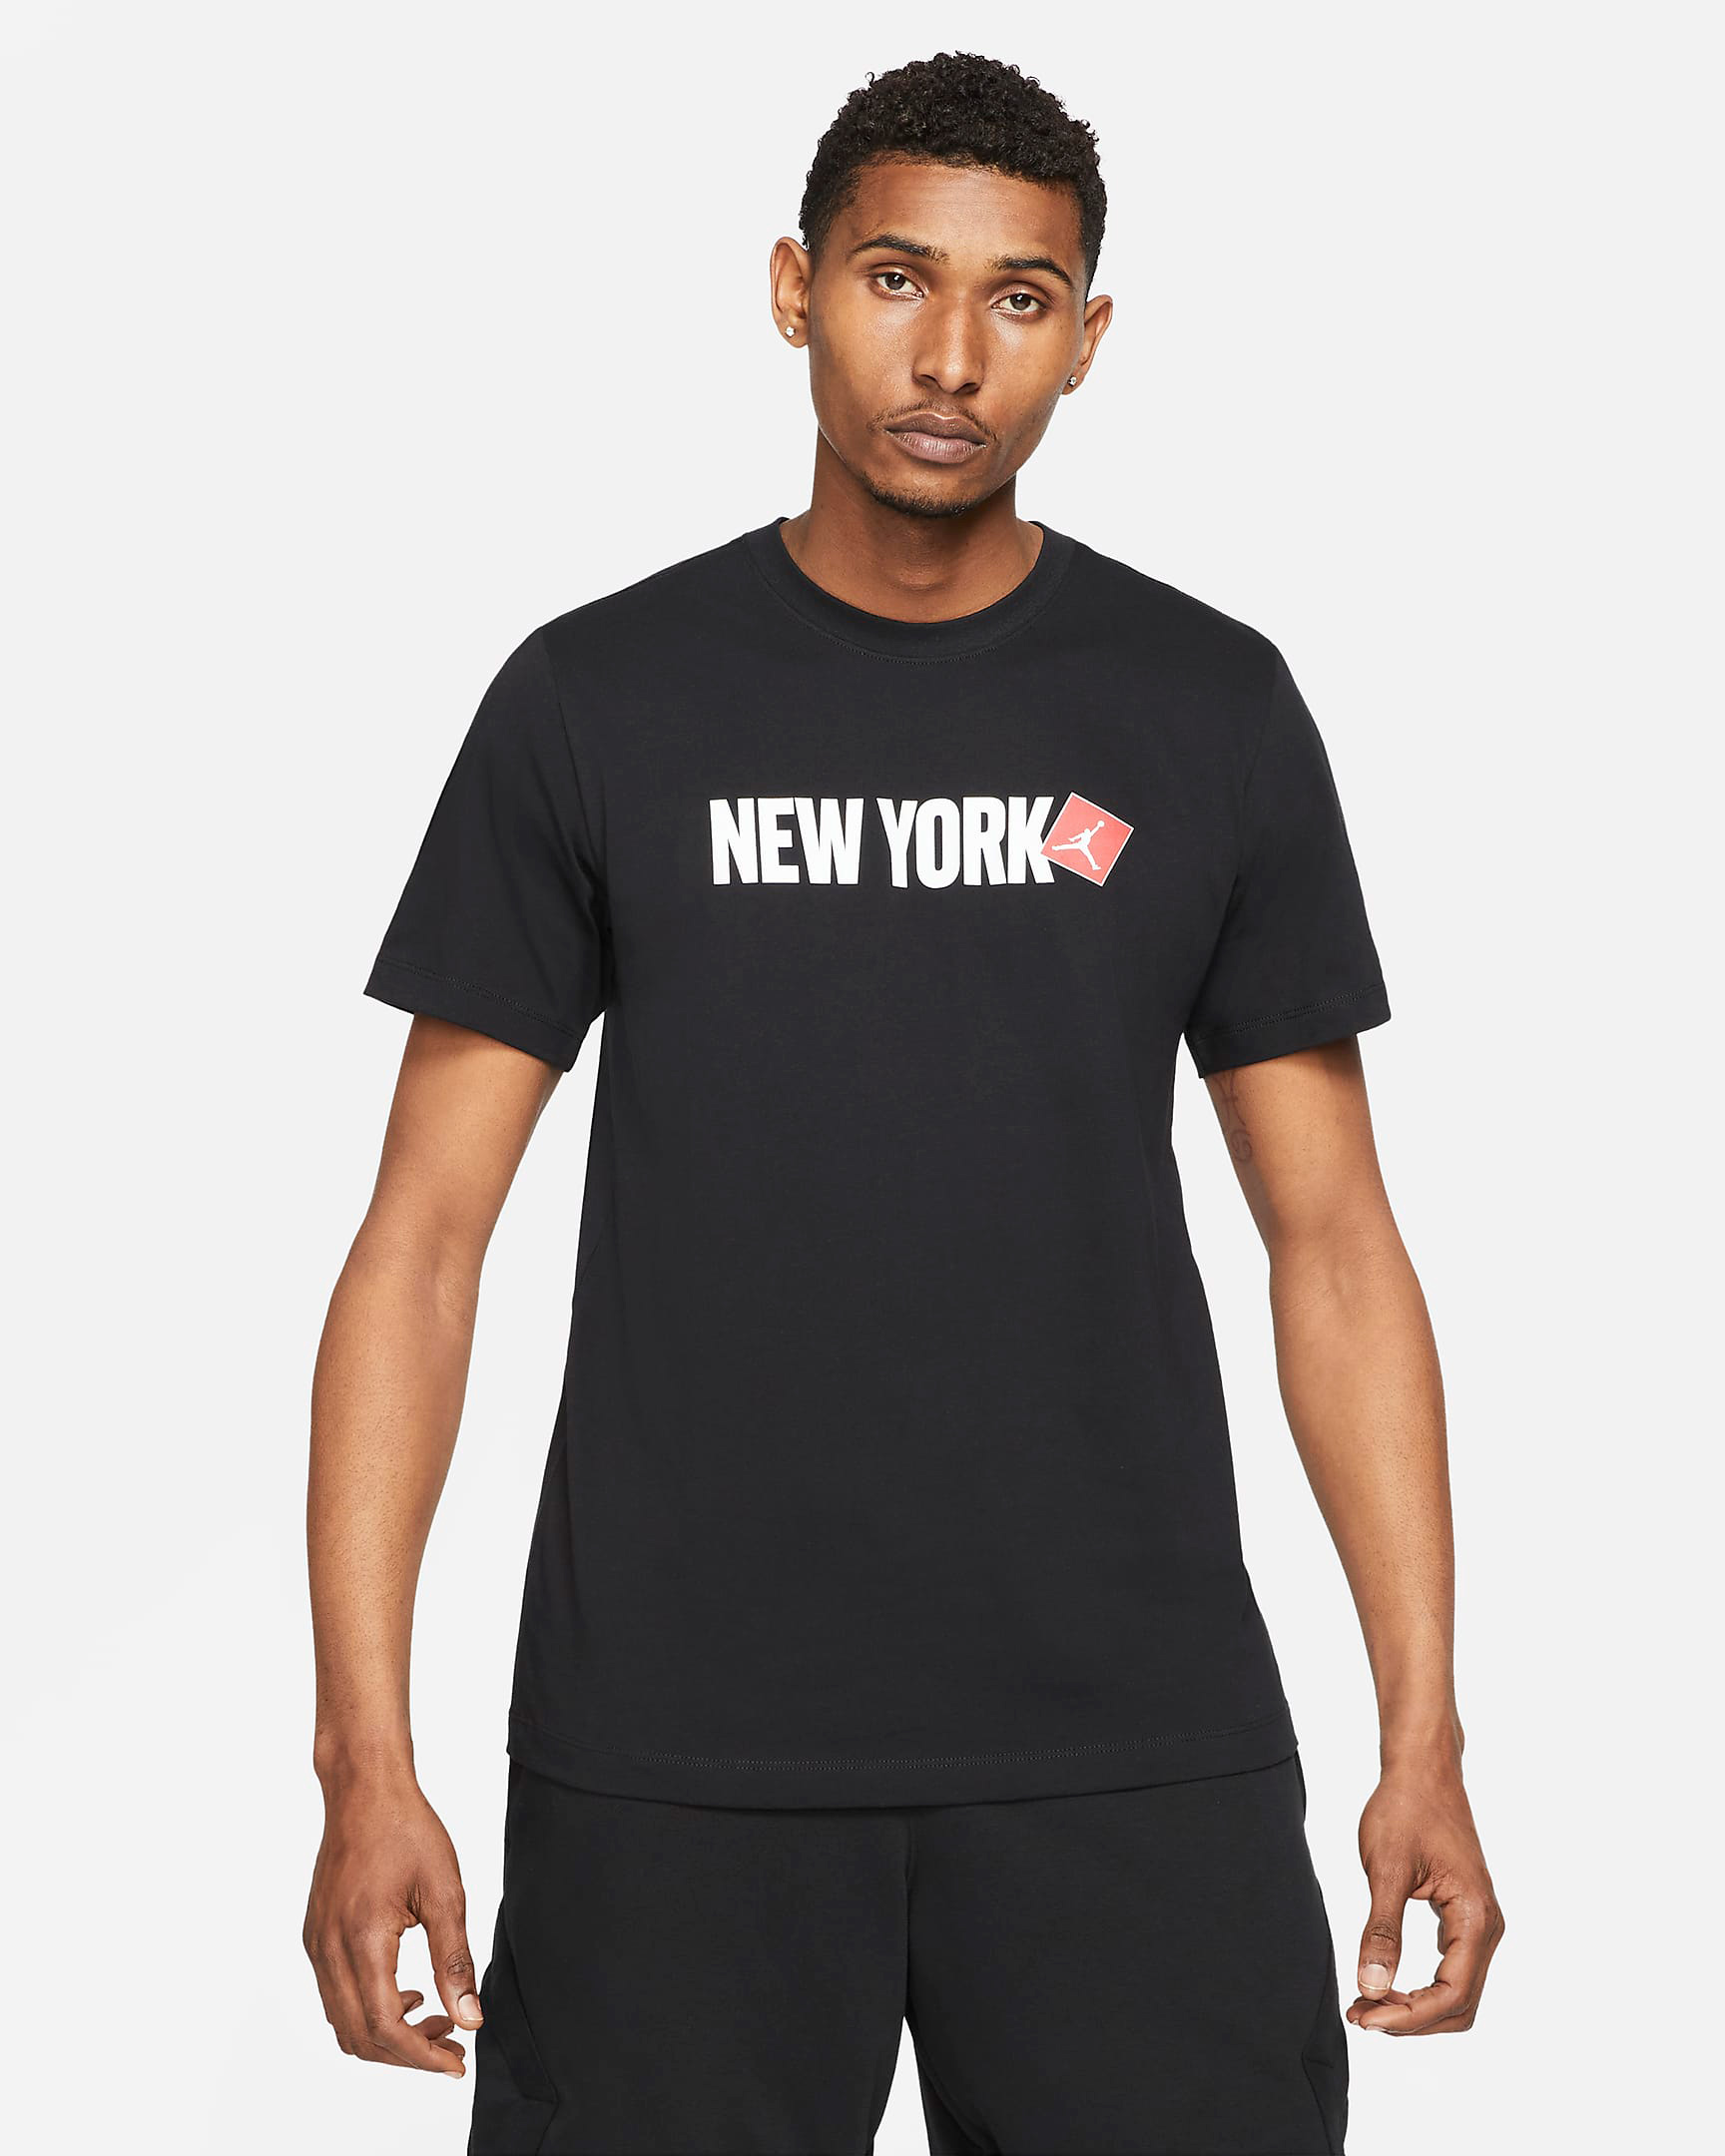 jordan-new-york-city-black-shirt-2